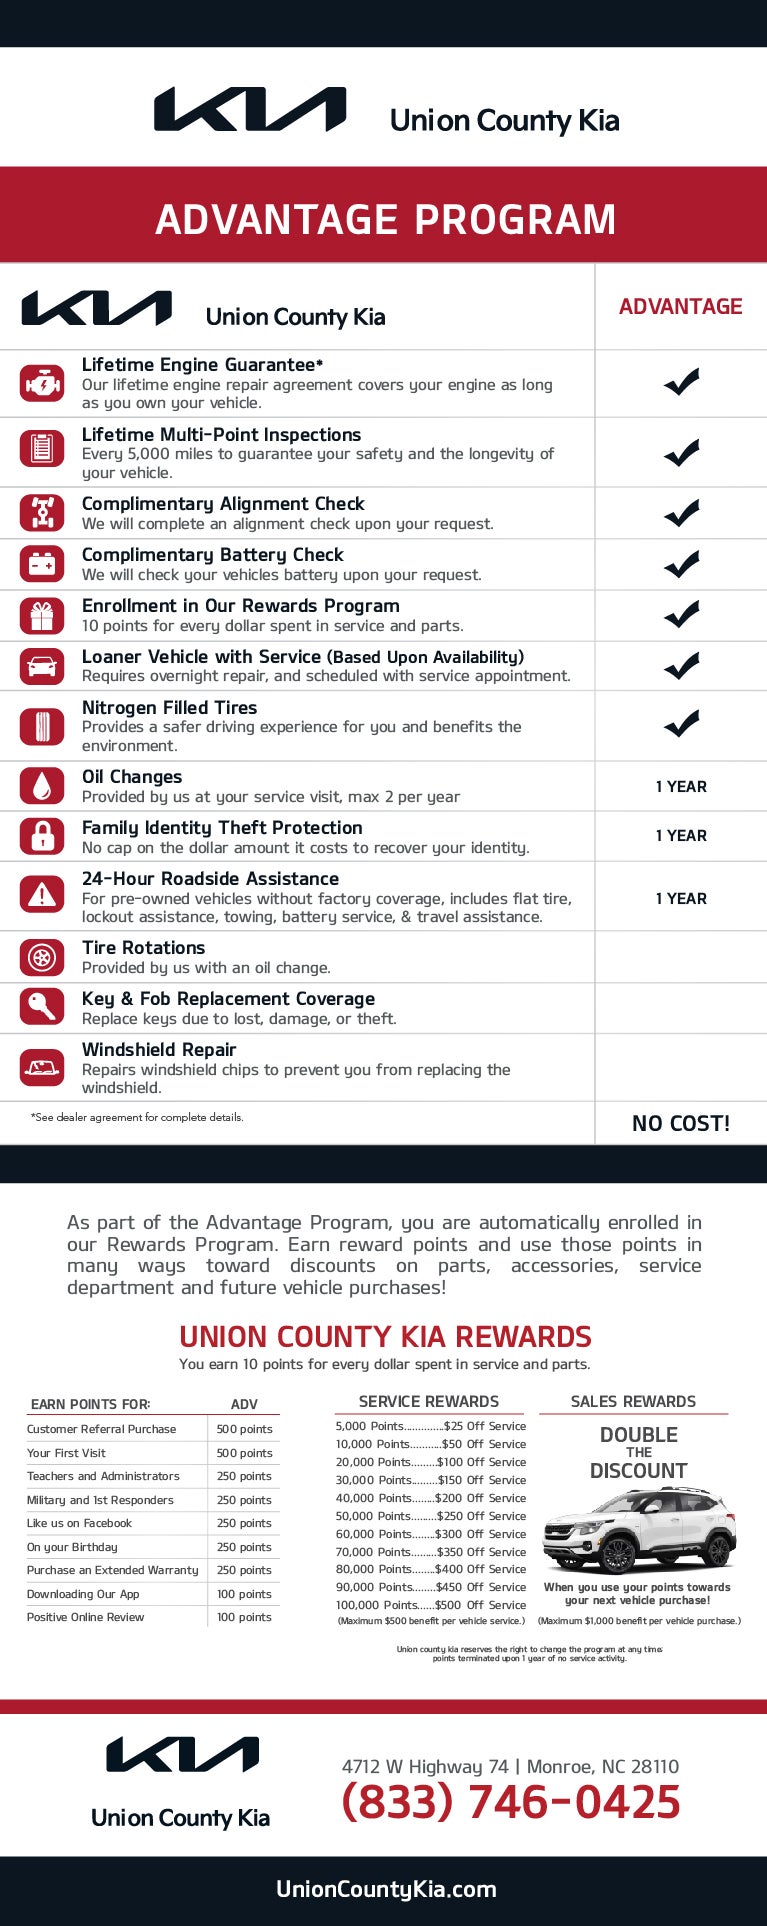 Union County kia Advantage Program